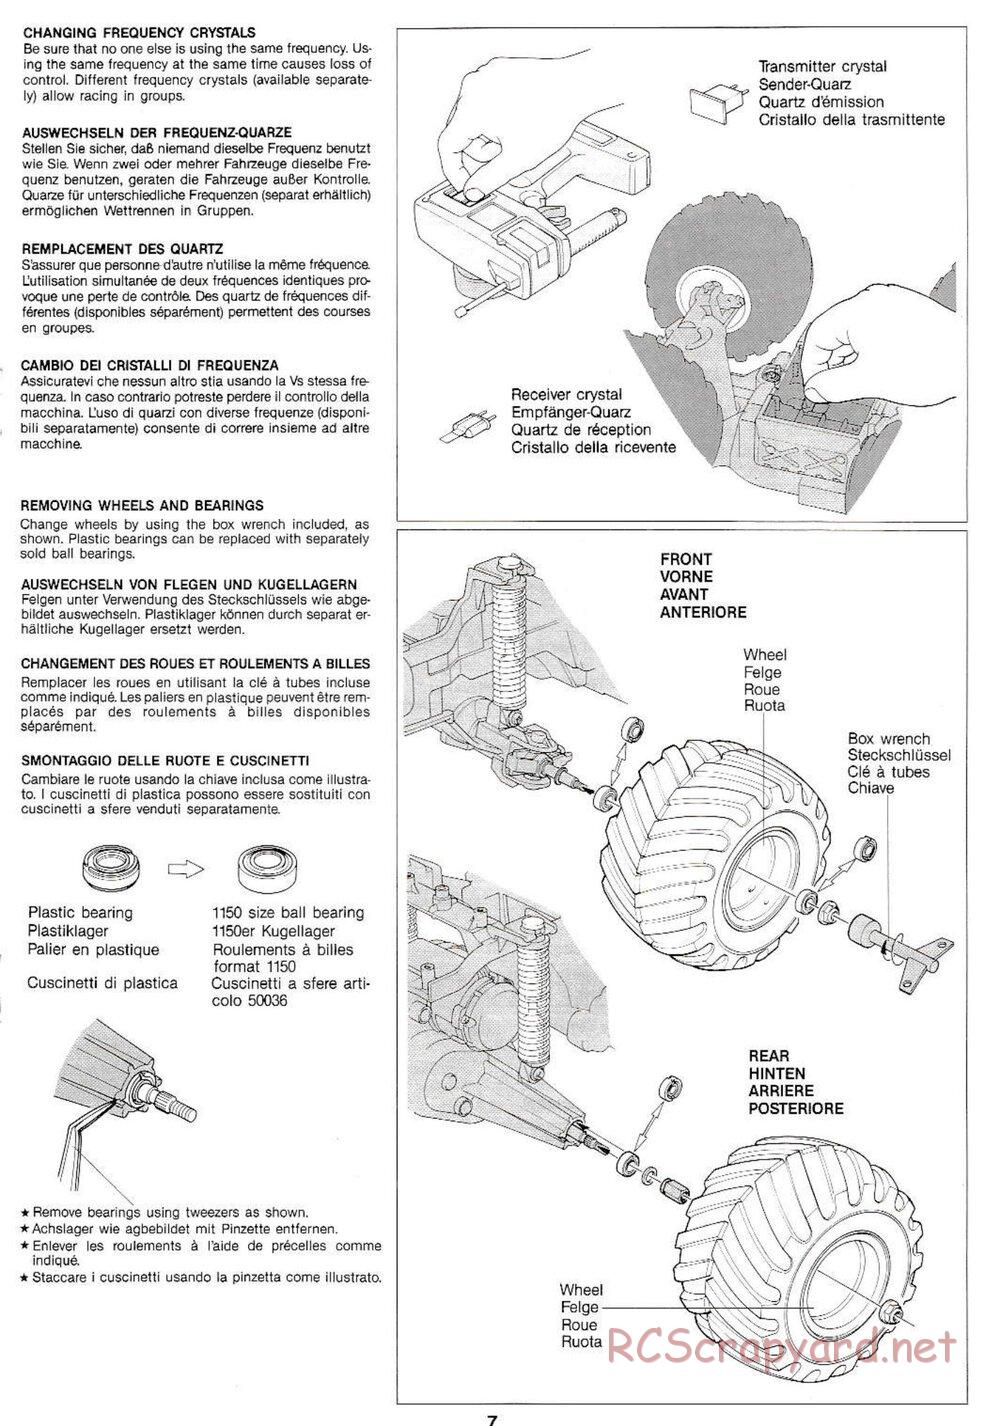 Tamiya - Midnight Pumpkin QD Chassis - Manual - Page 7